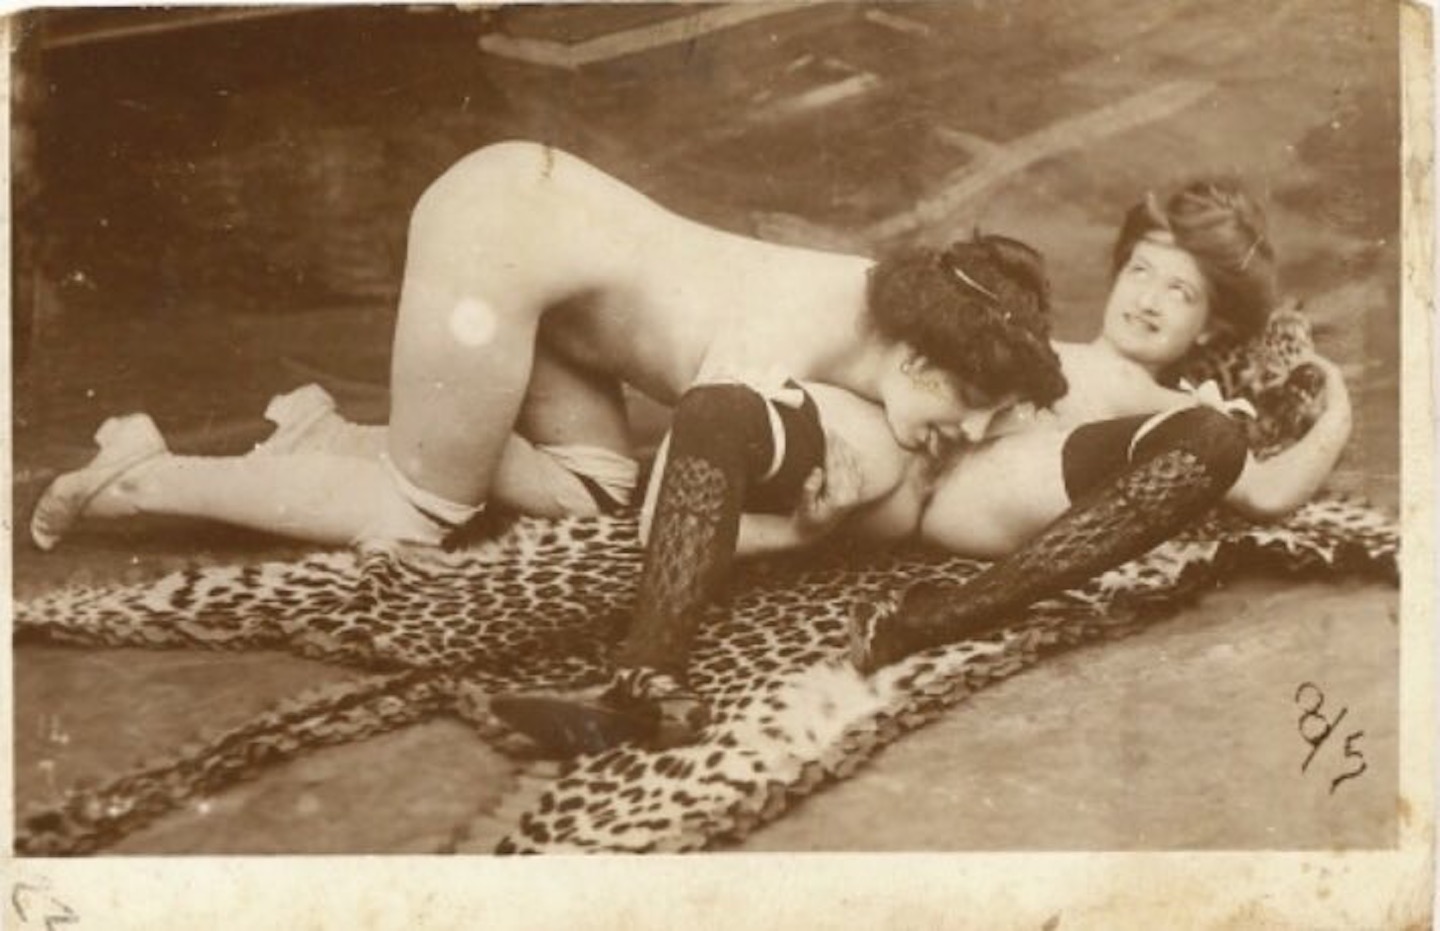 Victorian Era Cartoon Porn - The Unbridled Joy of Victorian Porn - VICE